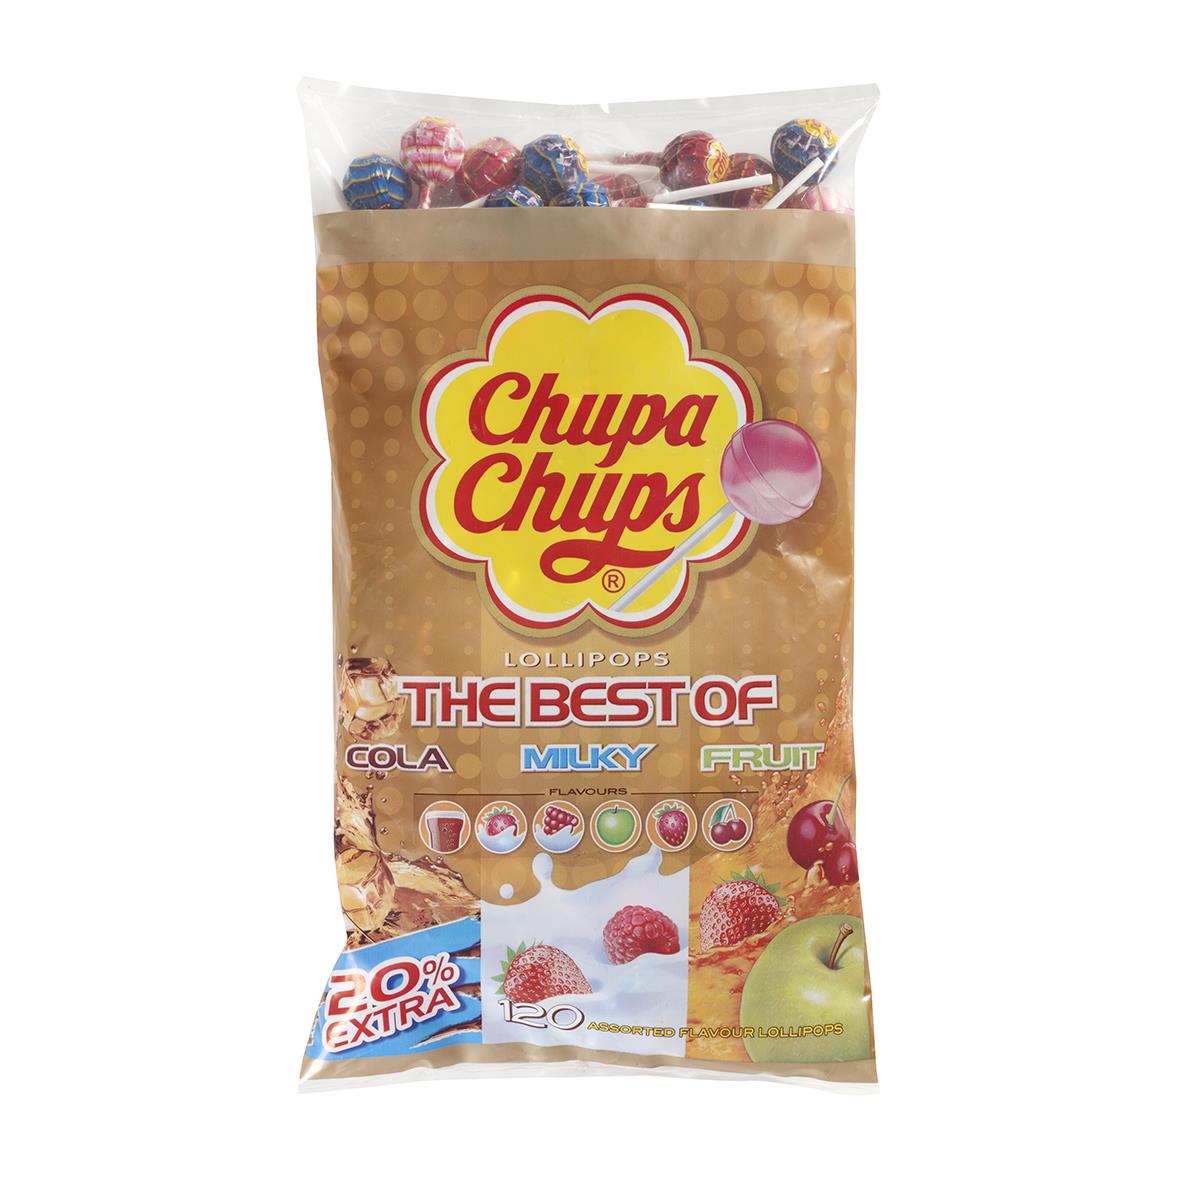 Godisklubba Chupa Chups Best Of Bags 60010789